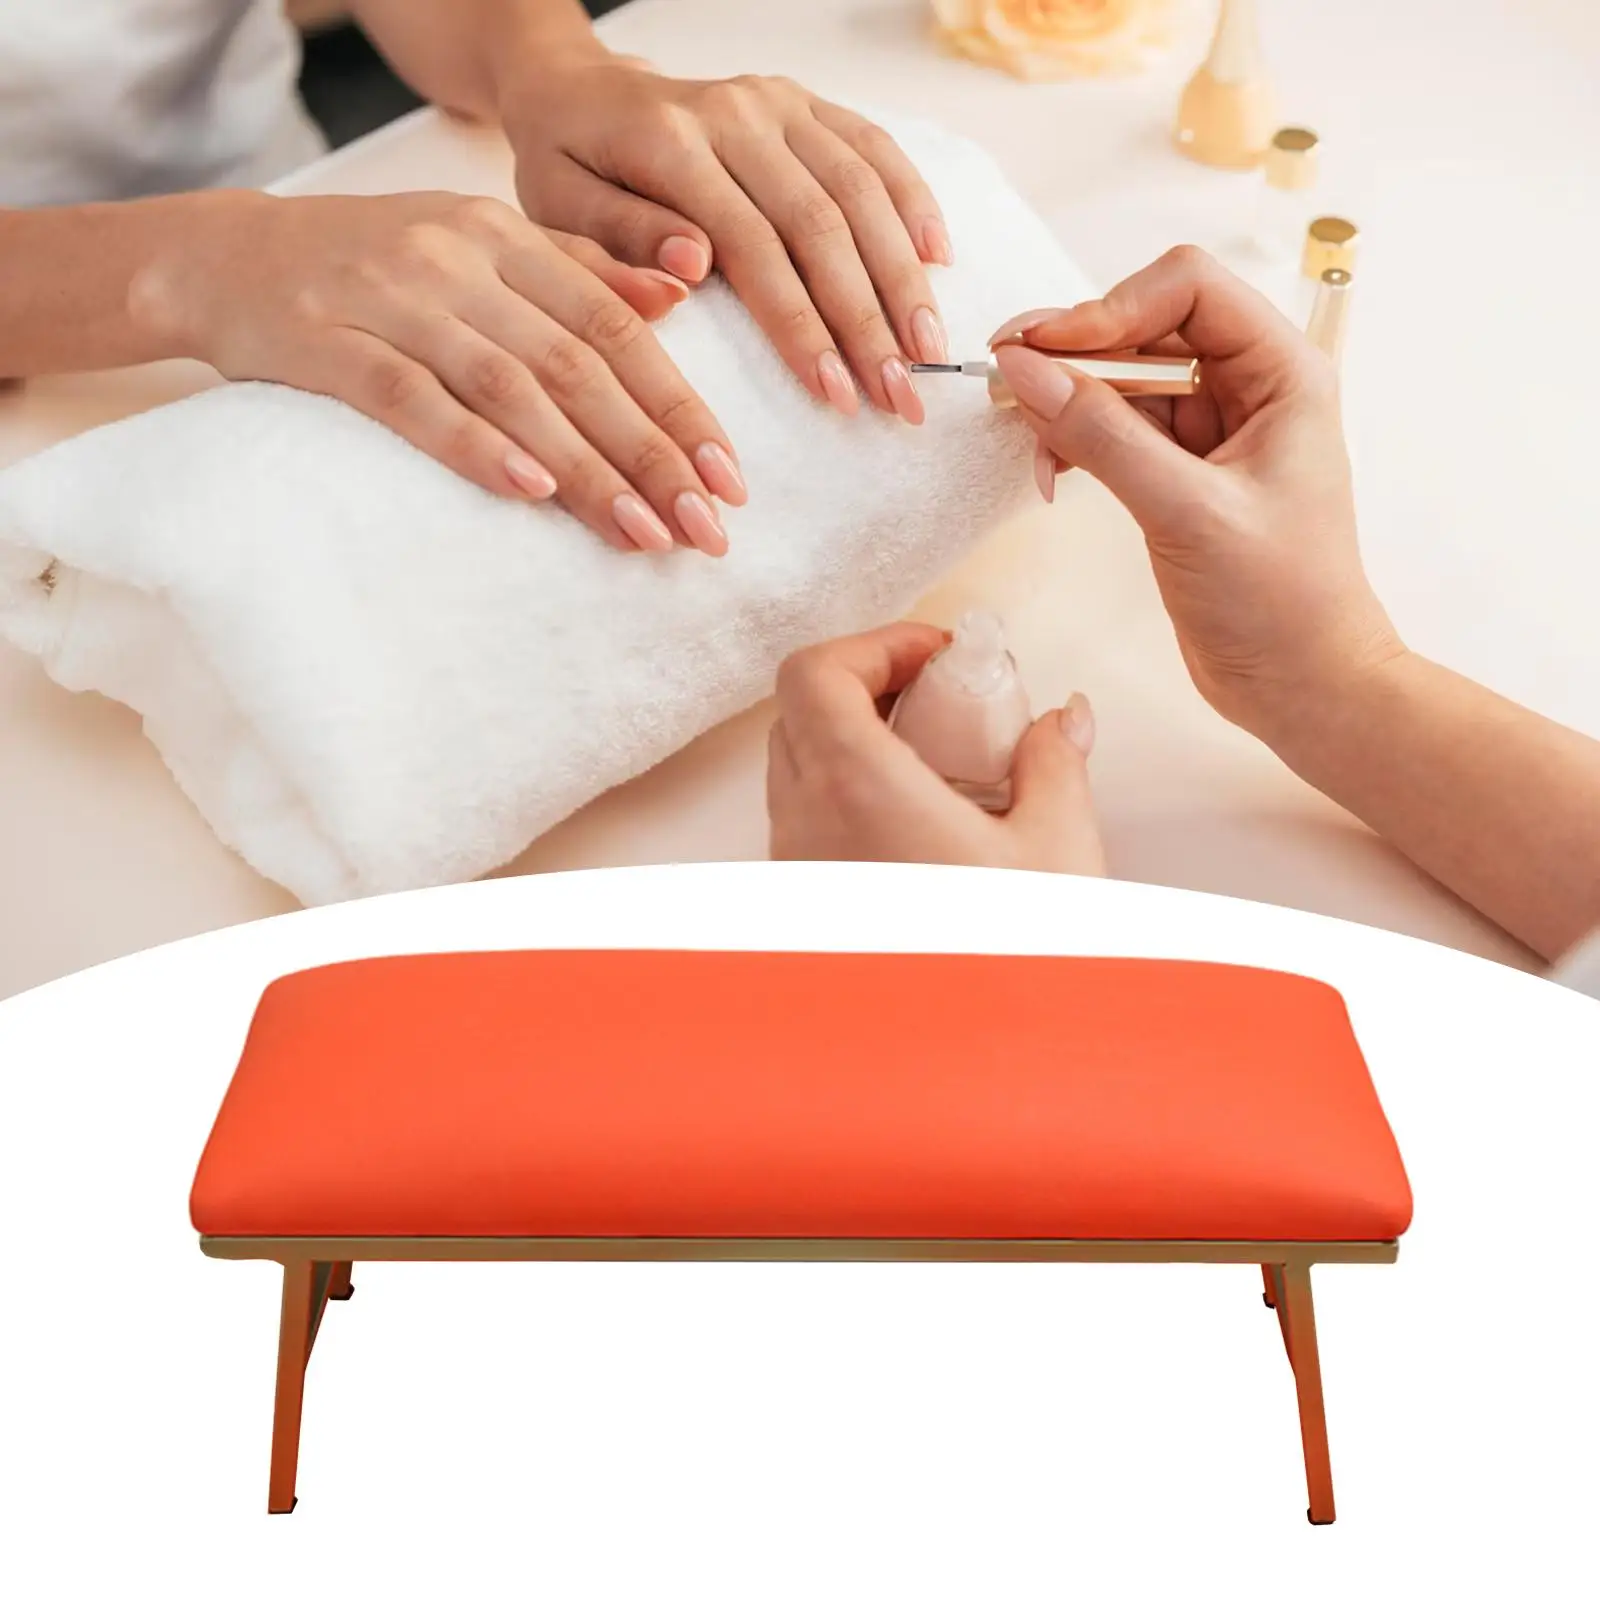 Nail Arm Rest Non Slip Table Premium Pad Accessory Arm Rest for Nails for Home Manicurist Salon Nail Technician Use